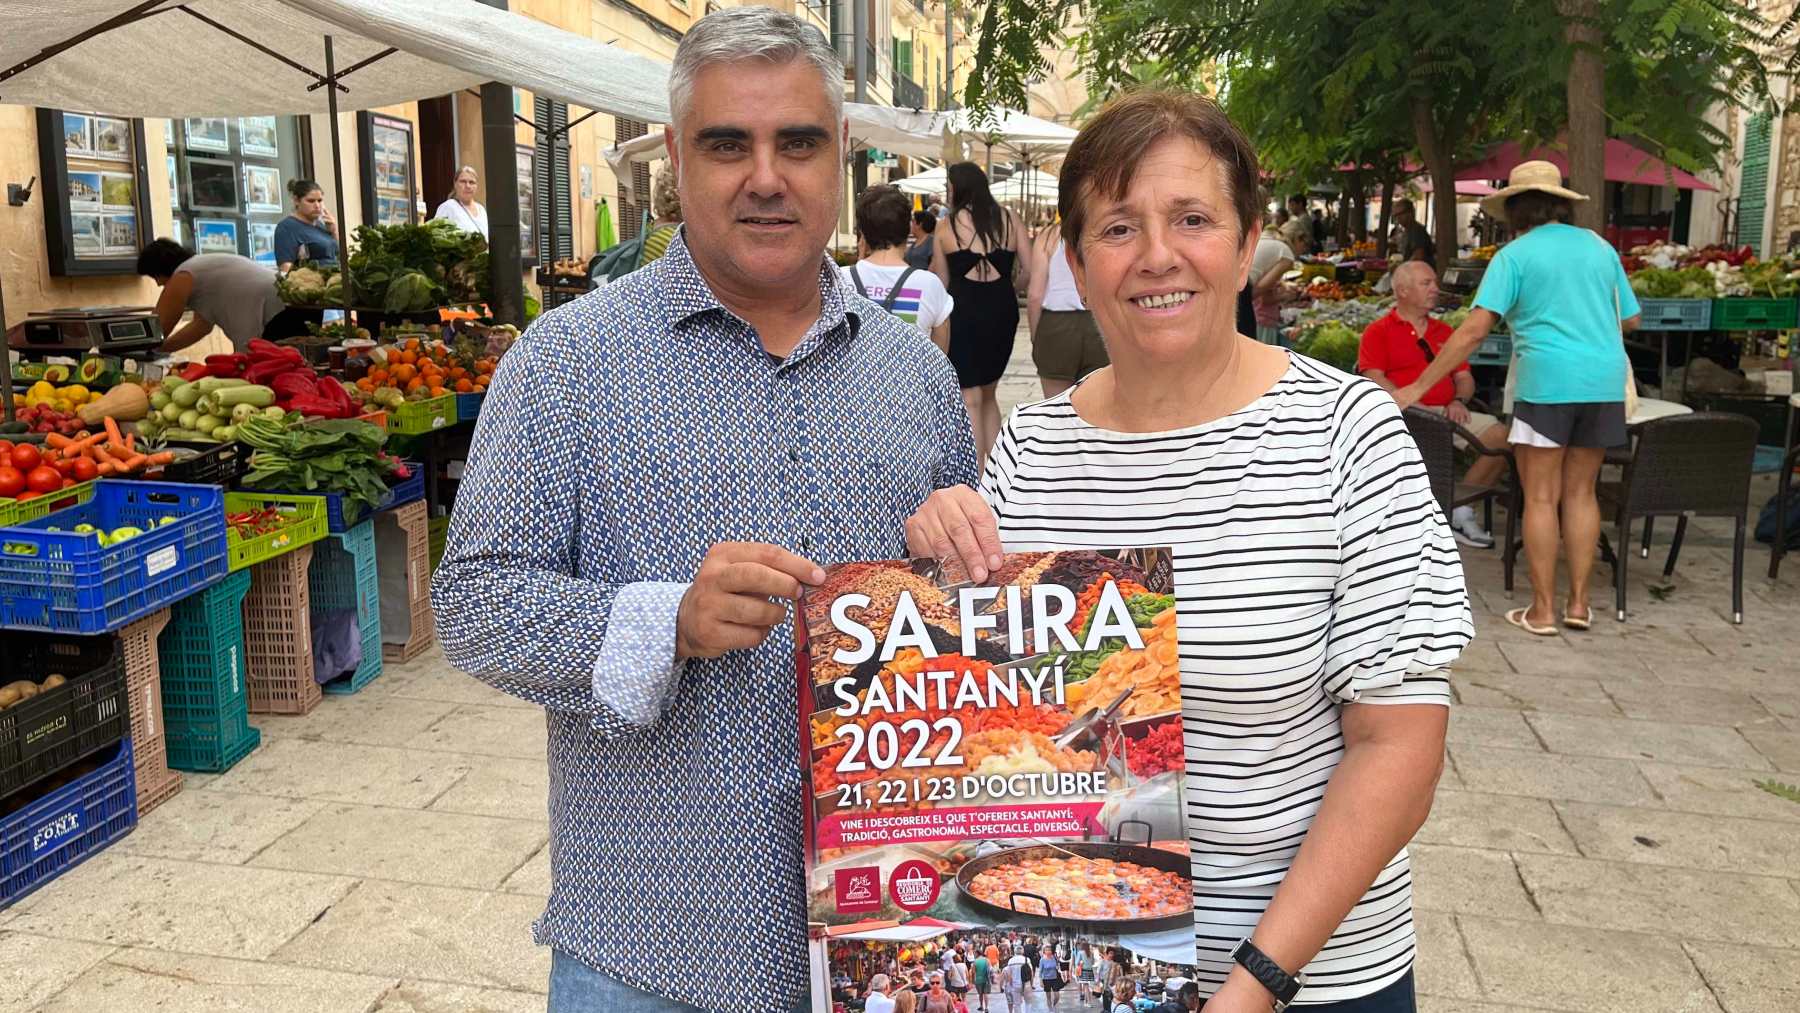 El regidor Antoni Matas y la alcaldesa Maria Pons mostrando el cartel de ‘Sa Fira’ de Santanyí 2022.